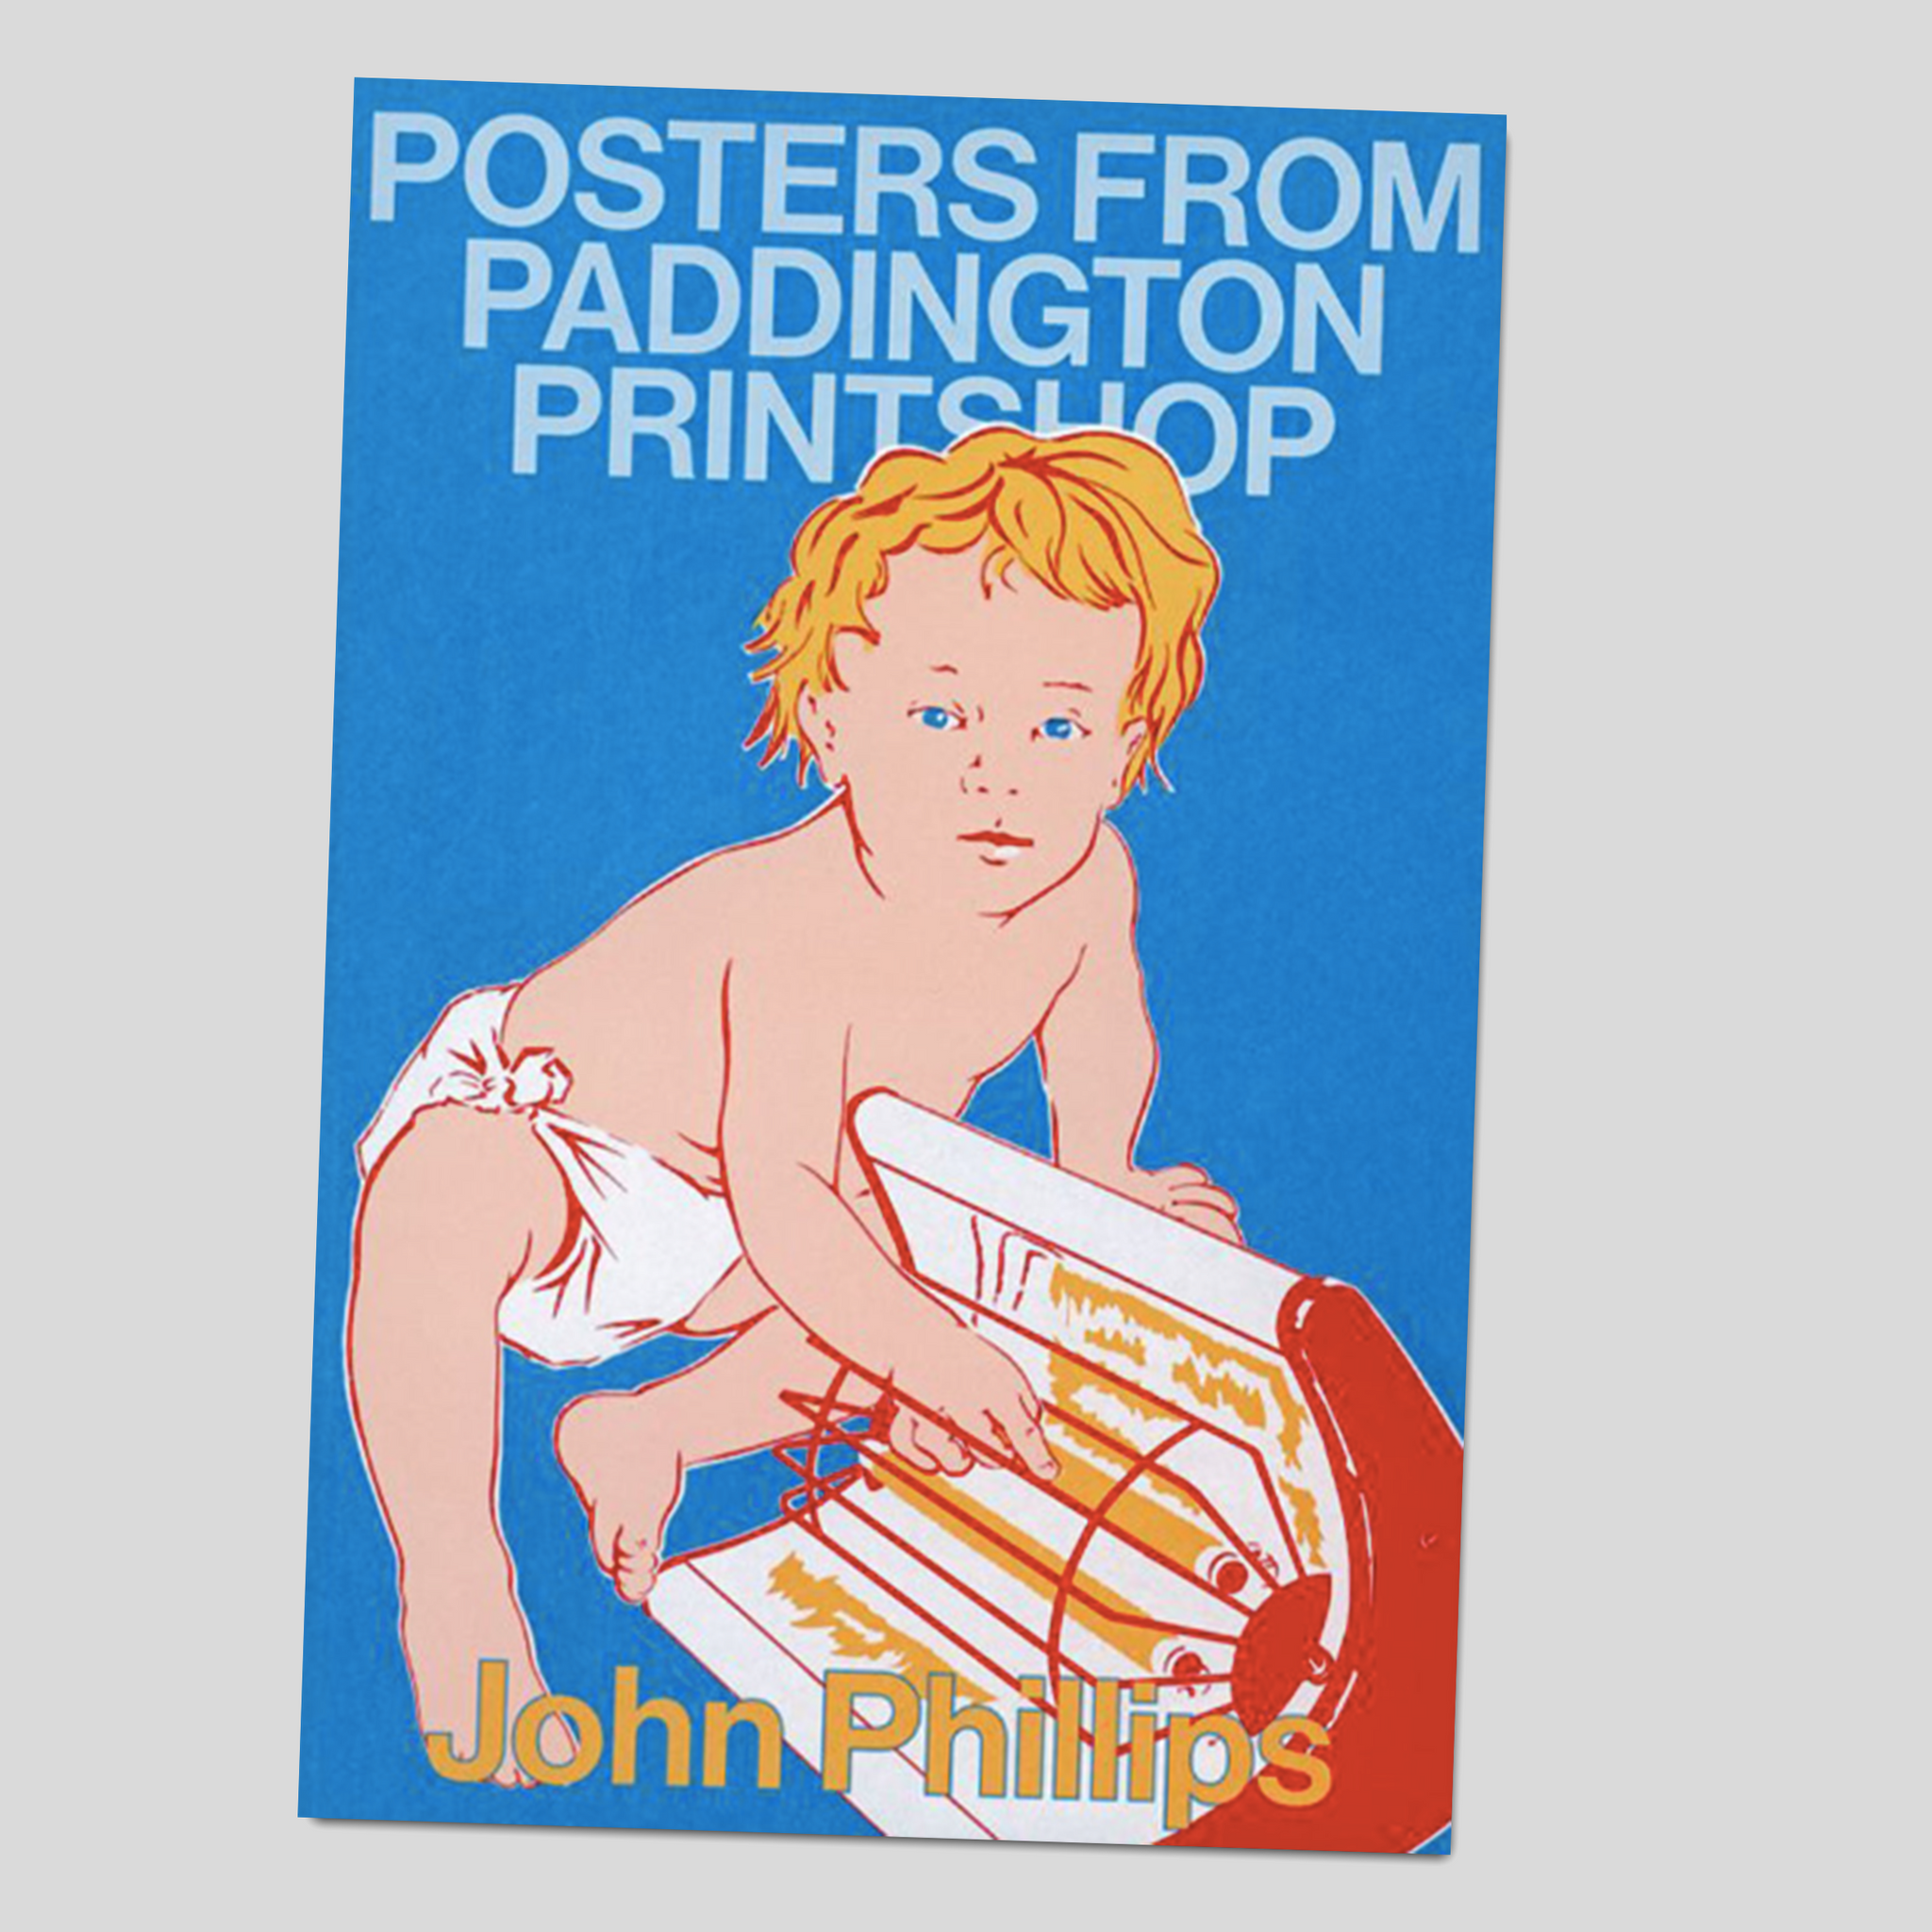 Posters From Paddington Printshop - John Philips